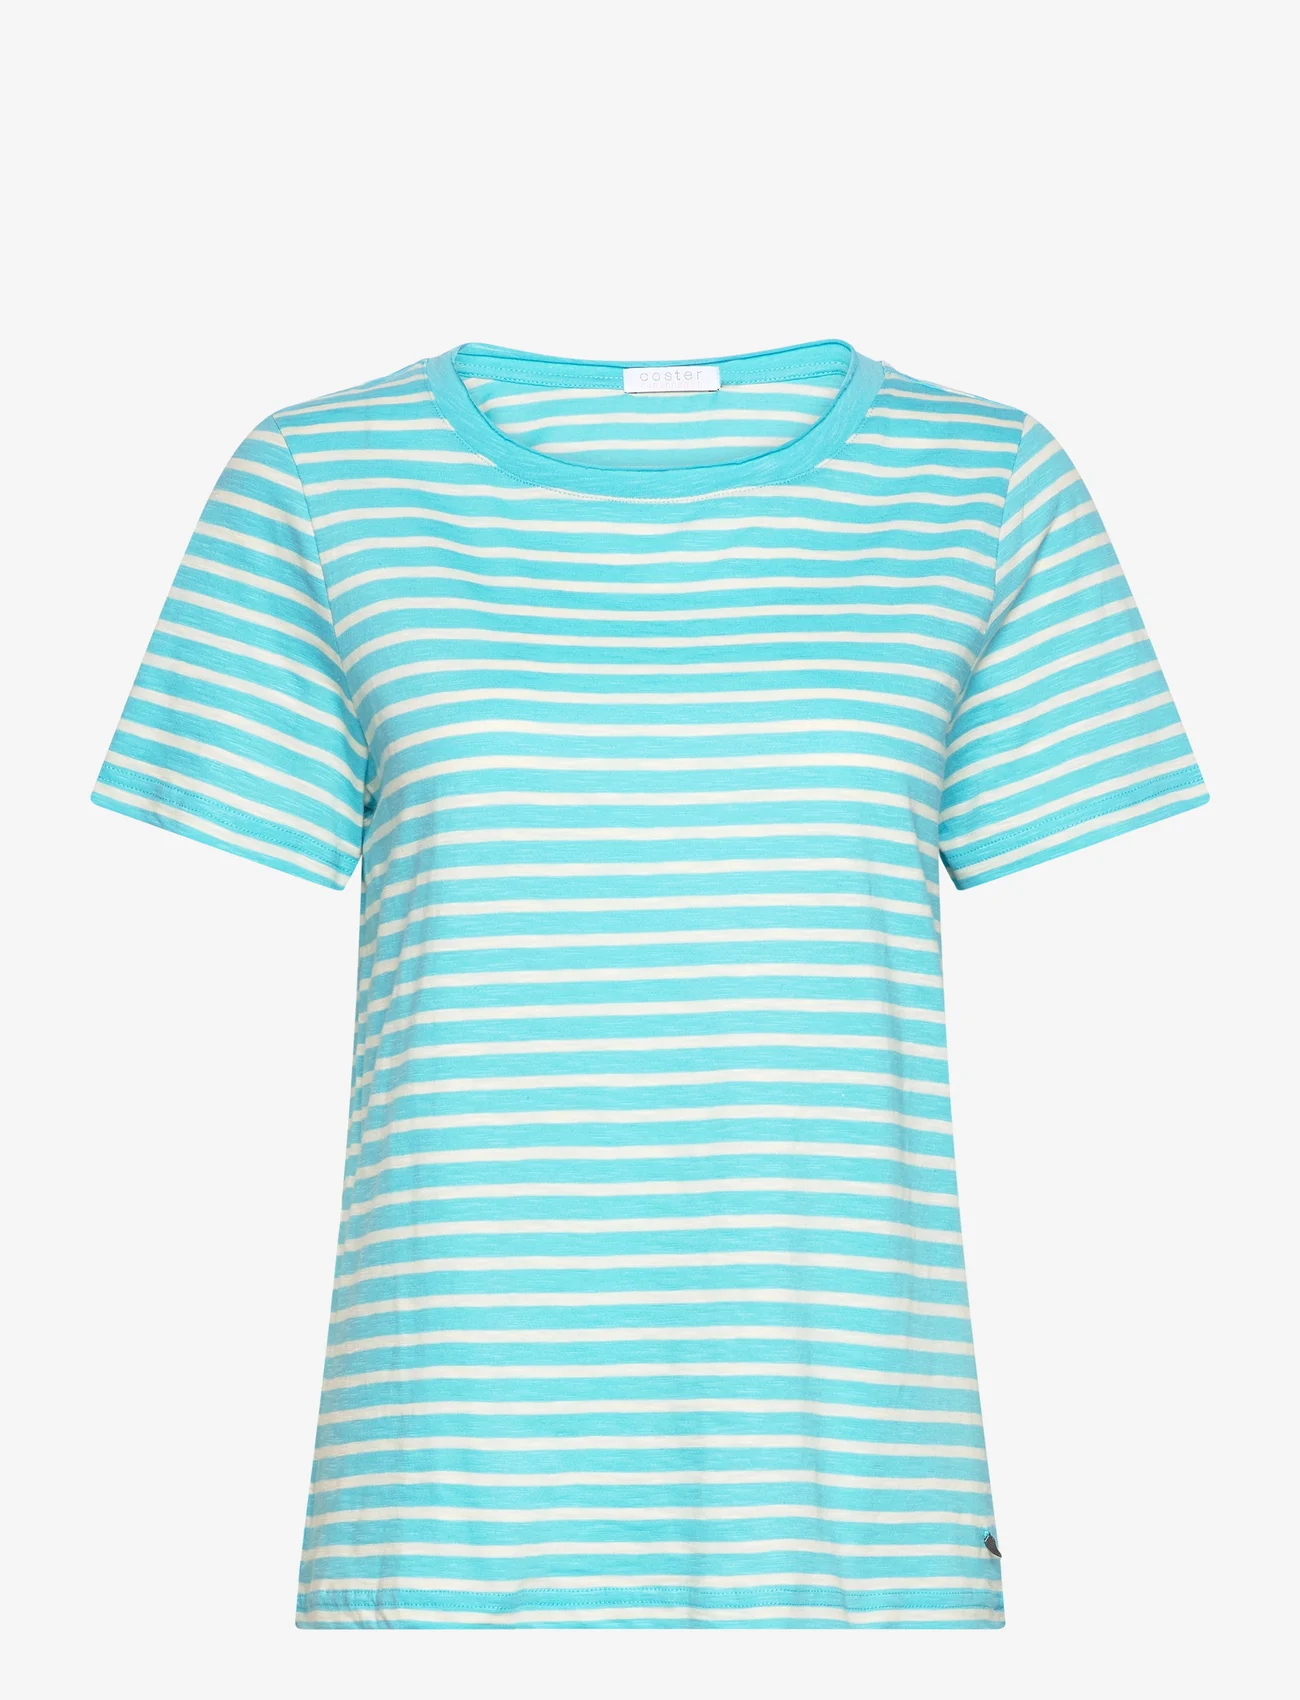 Coster Copenhagen - T-shirt with stripes - Mid sleeve - t-särgid - aqua blue/creme stripe - 0